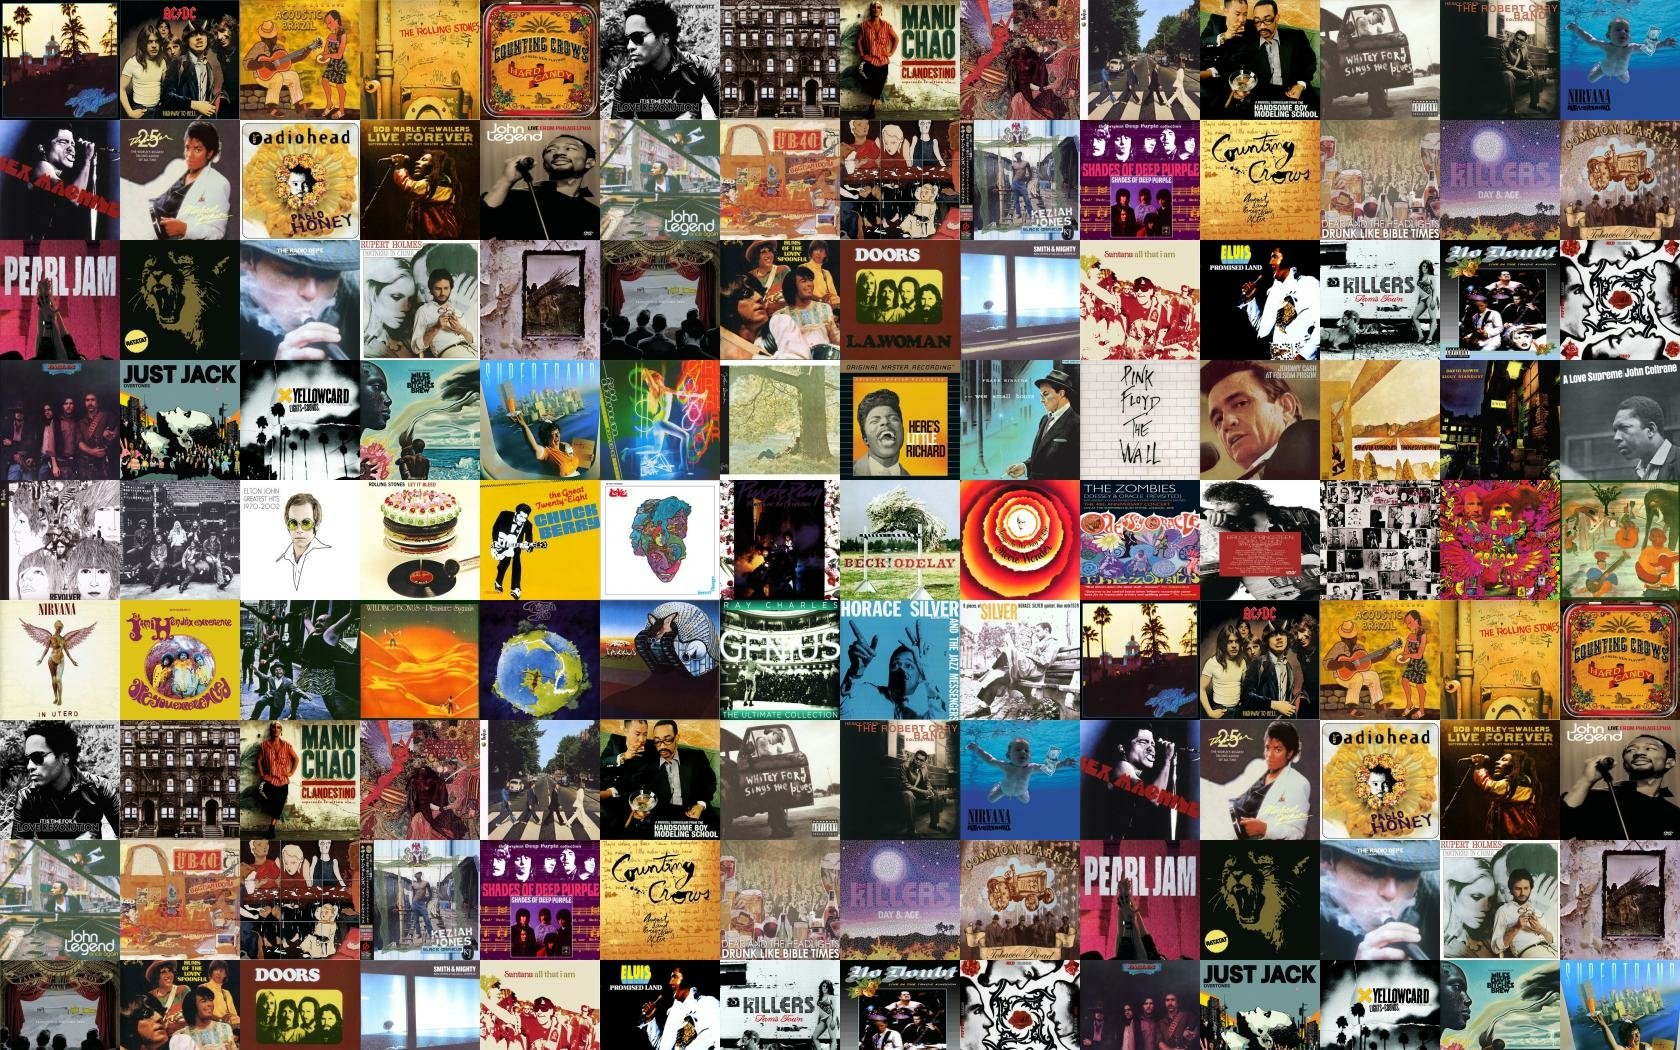 Album Cover Collage Wallpaper